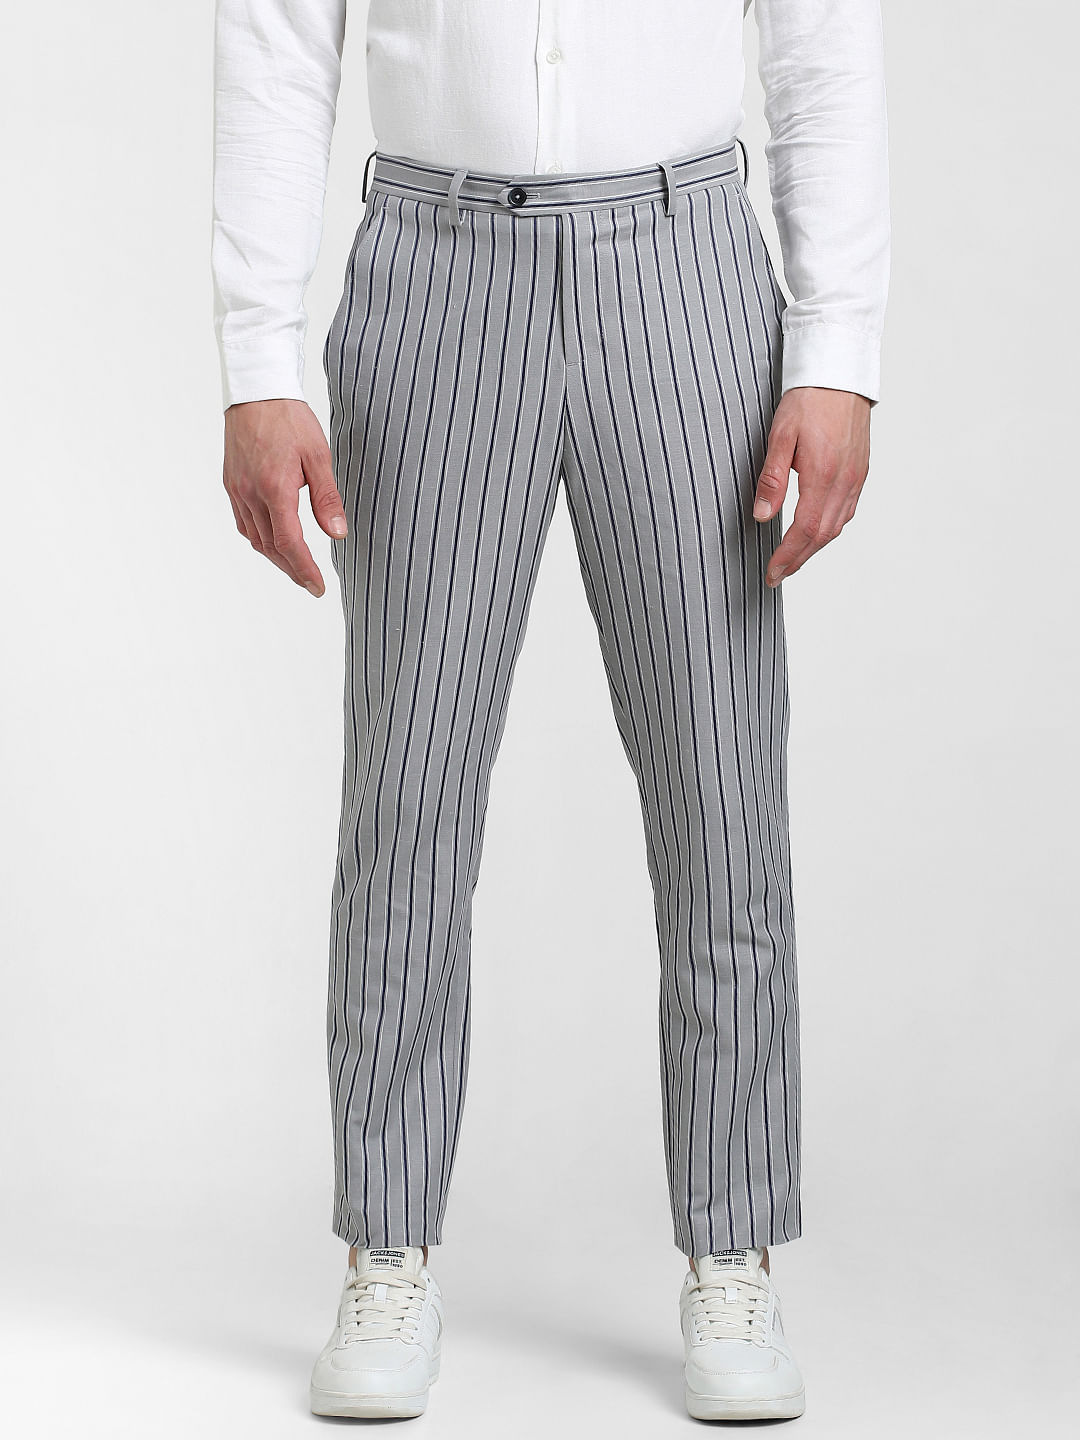 Jacquard-stripe linen trousers | HARAGO | Linen trousers men, Striped  linen, Linen trousers